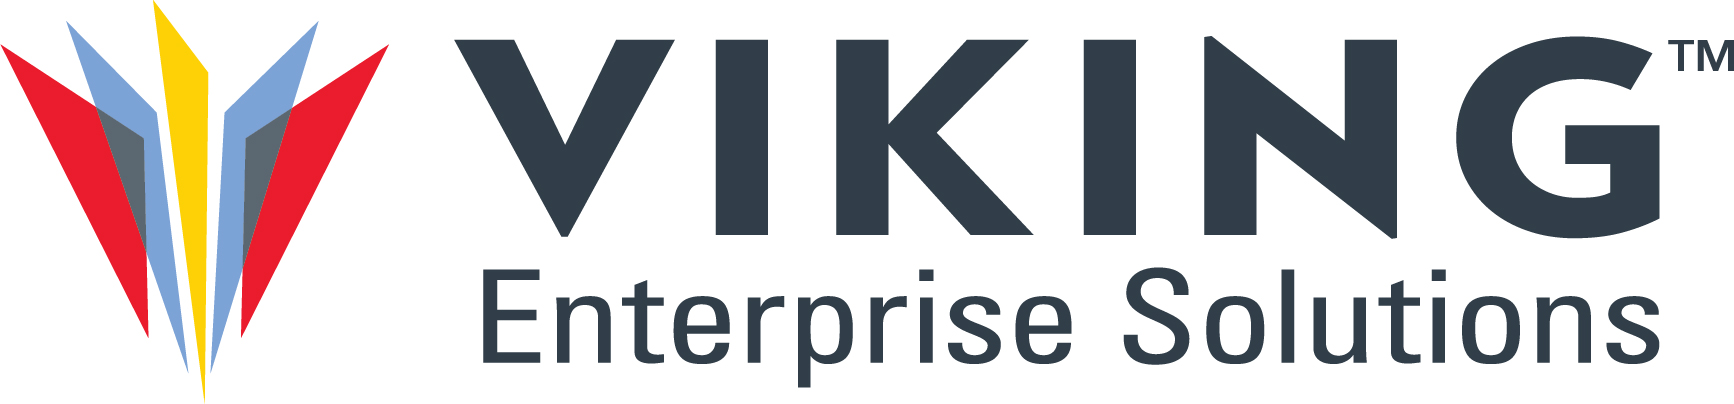 Viking Enterprise Solutions